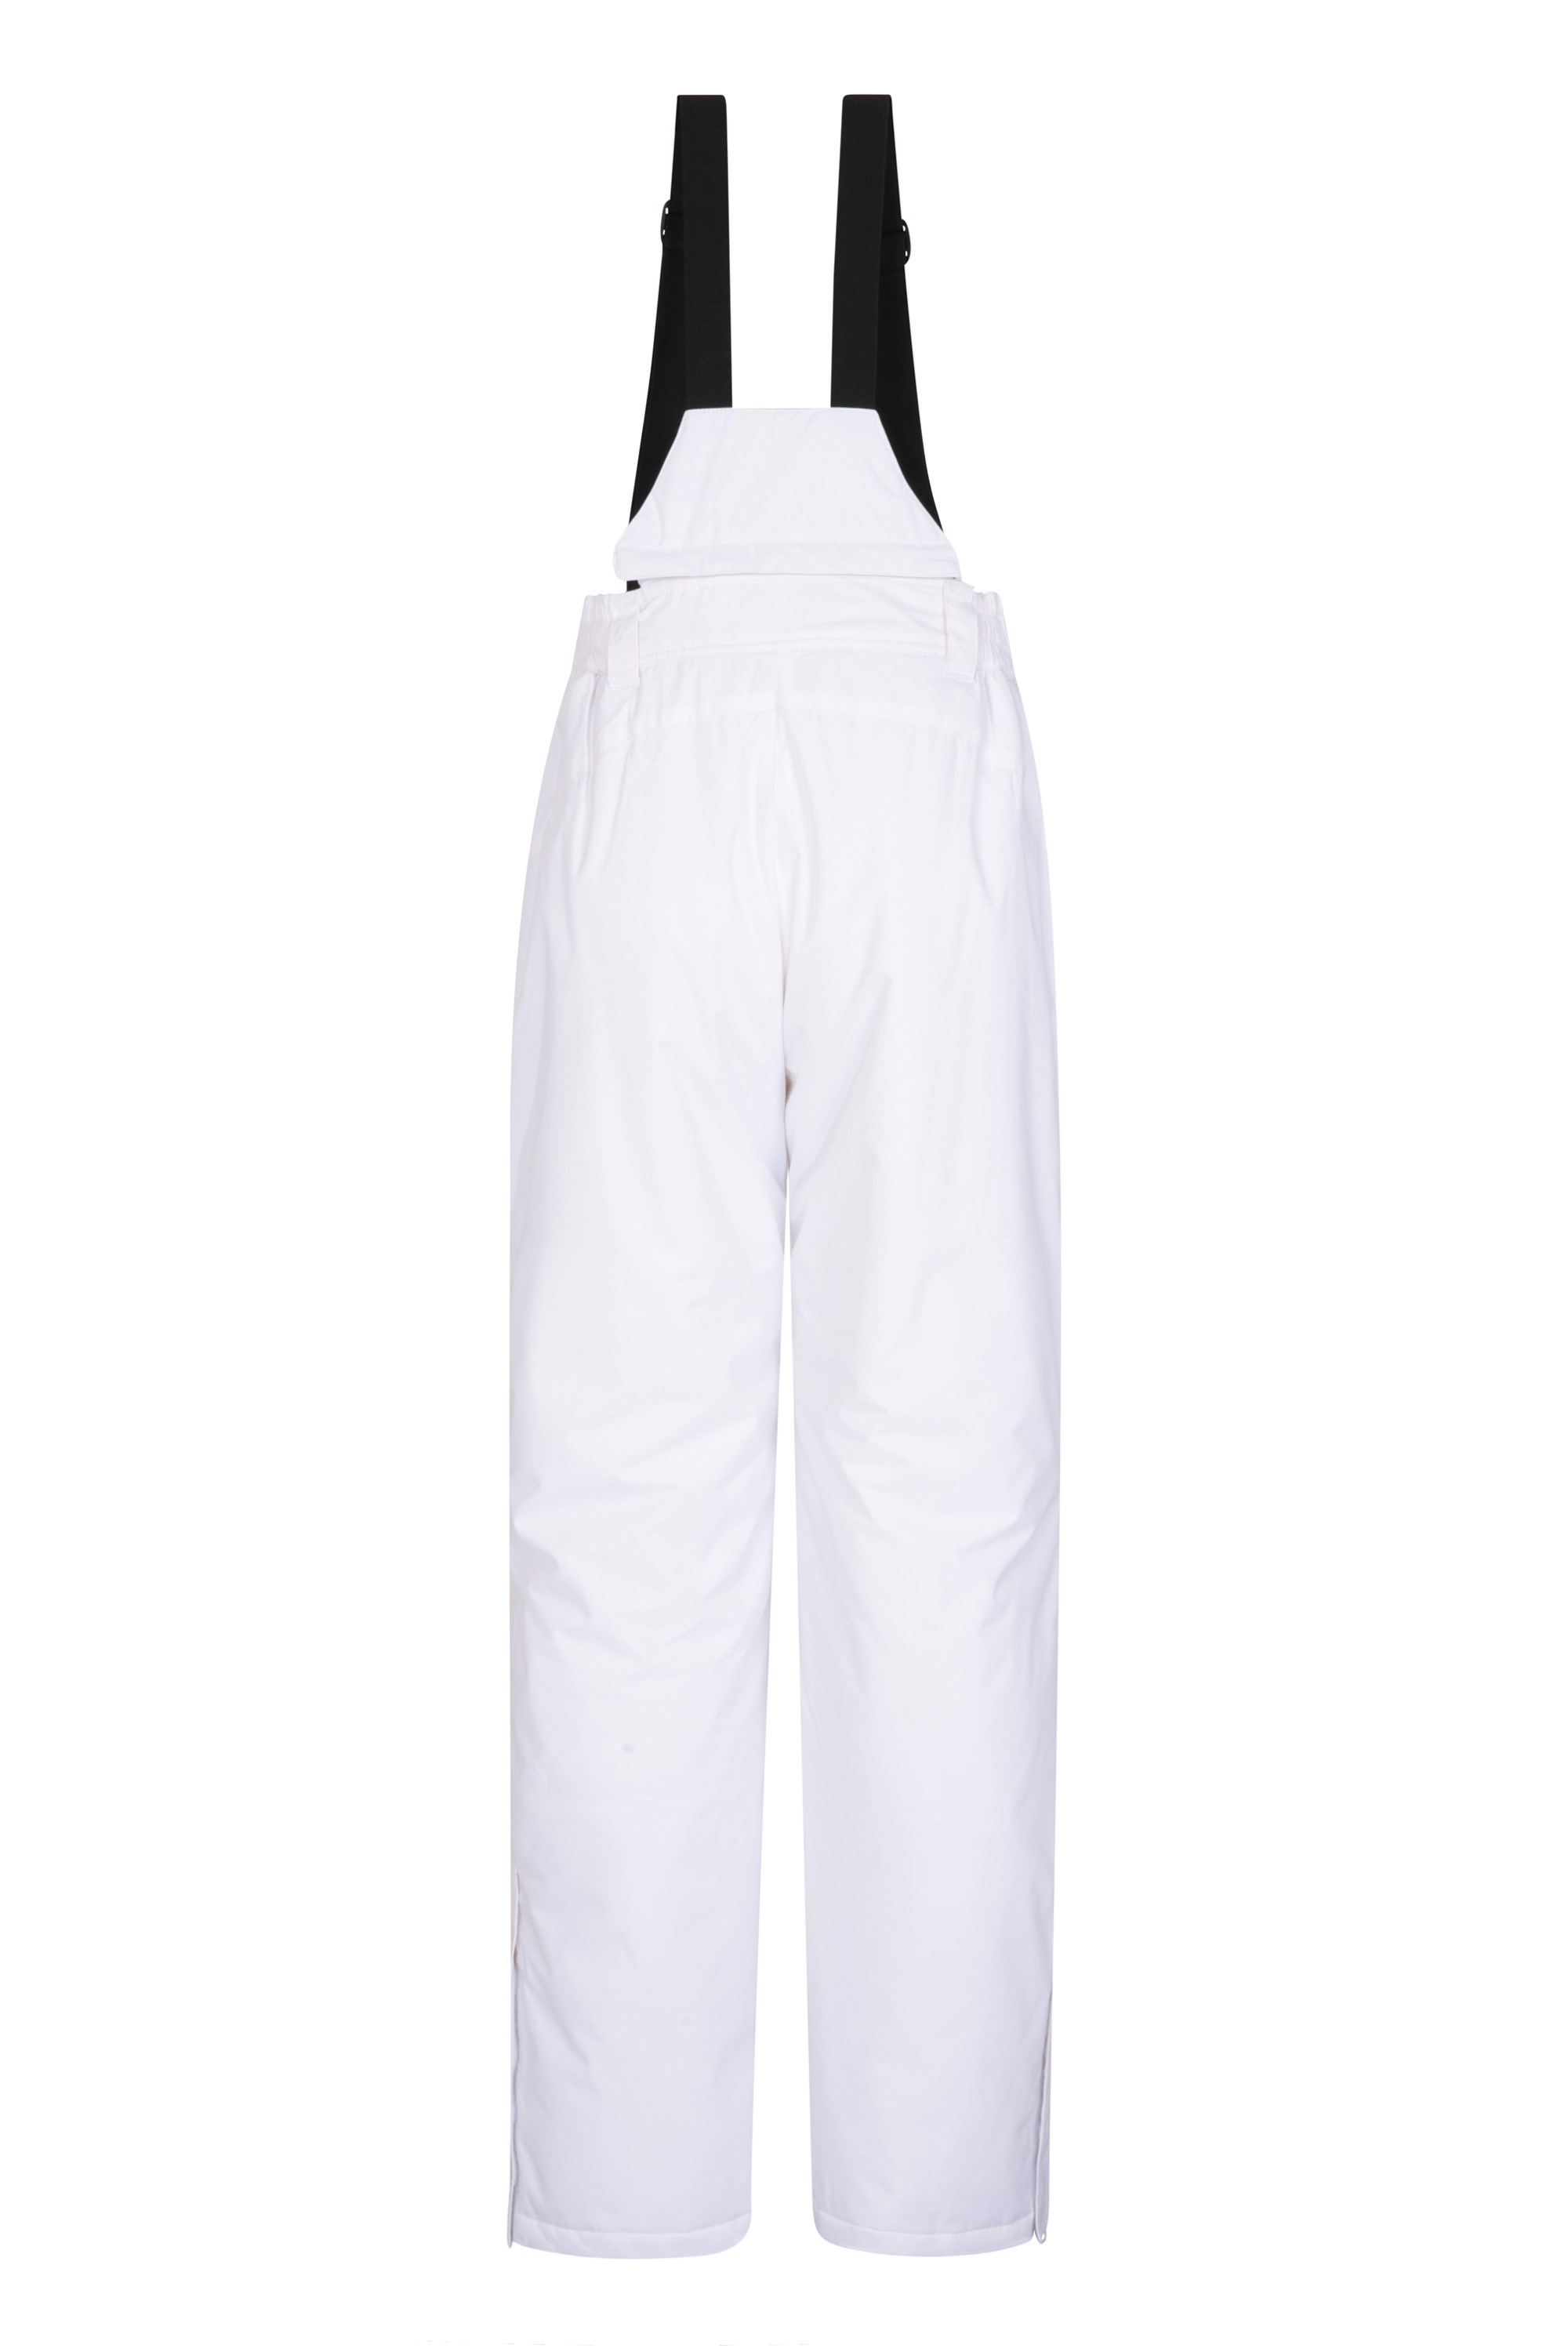 NEW Womens Mountain Warehouse Ski Trousers Salopettes 20 Grey Textured RP £99.99 